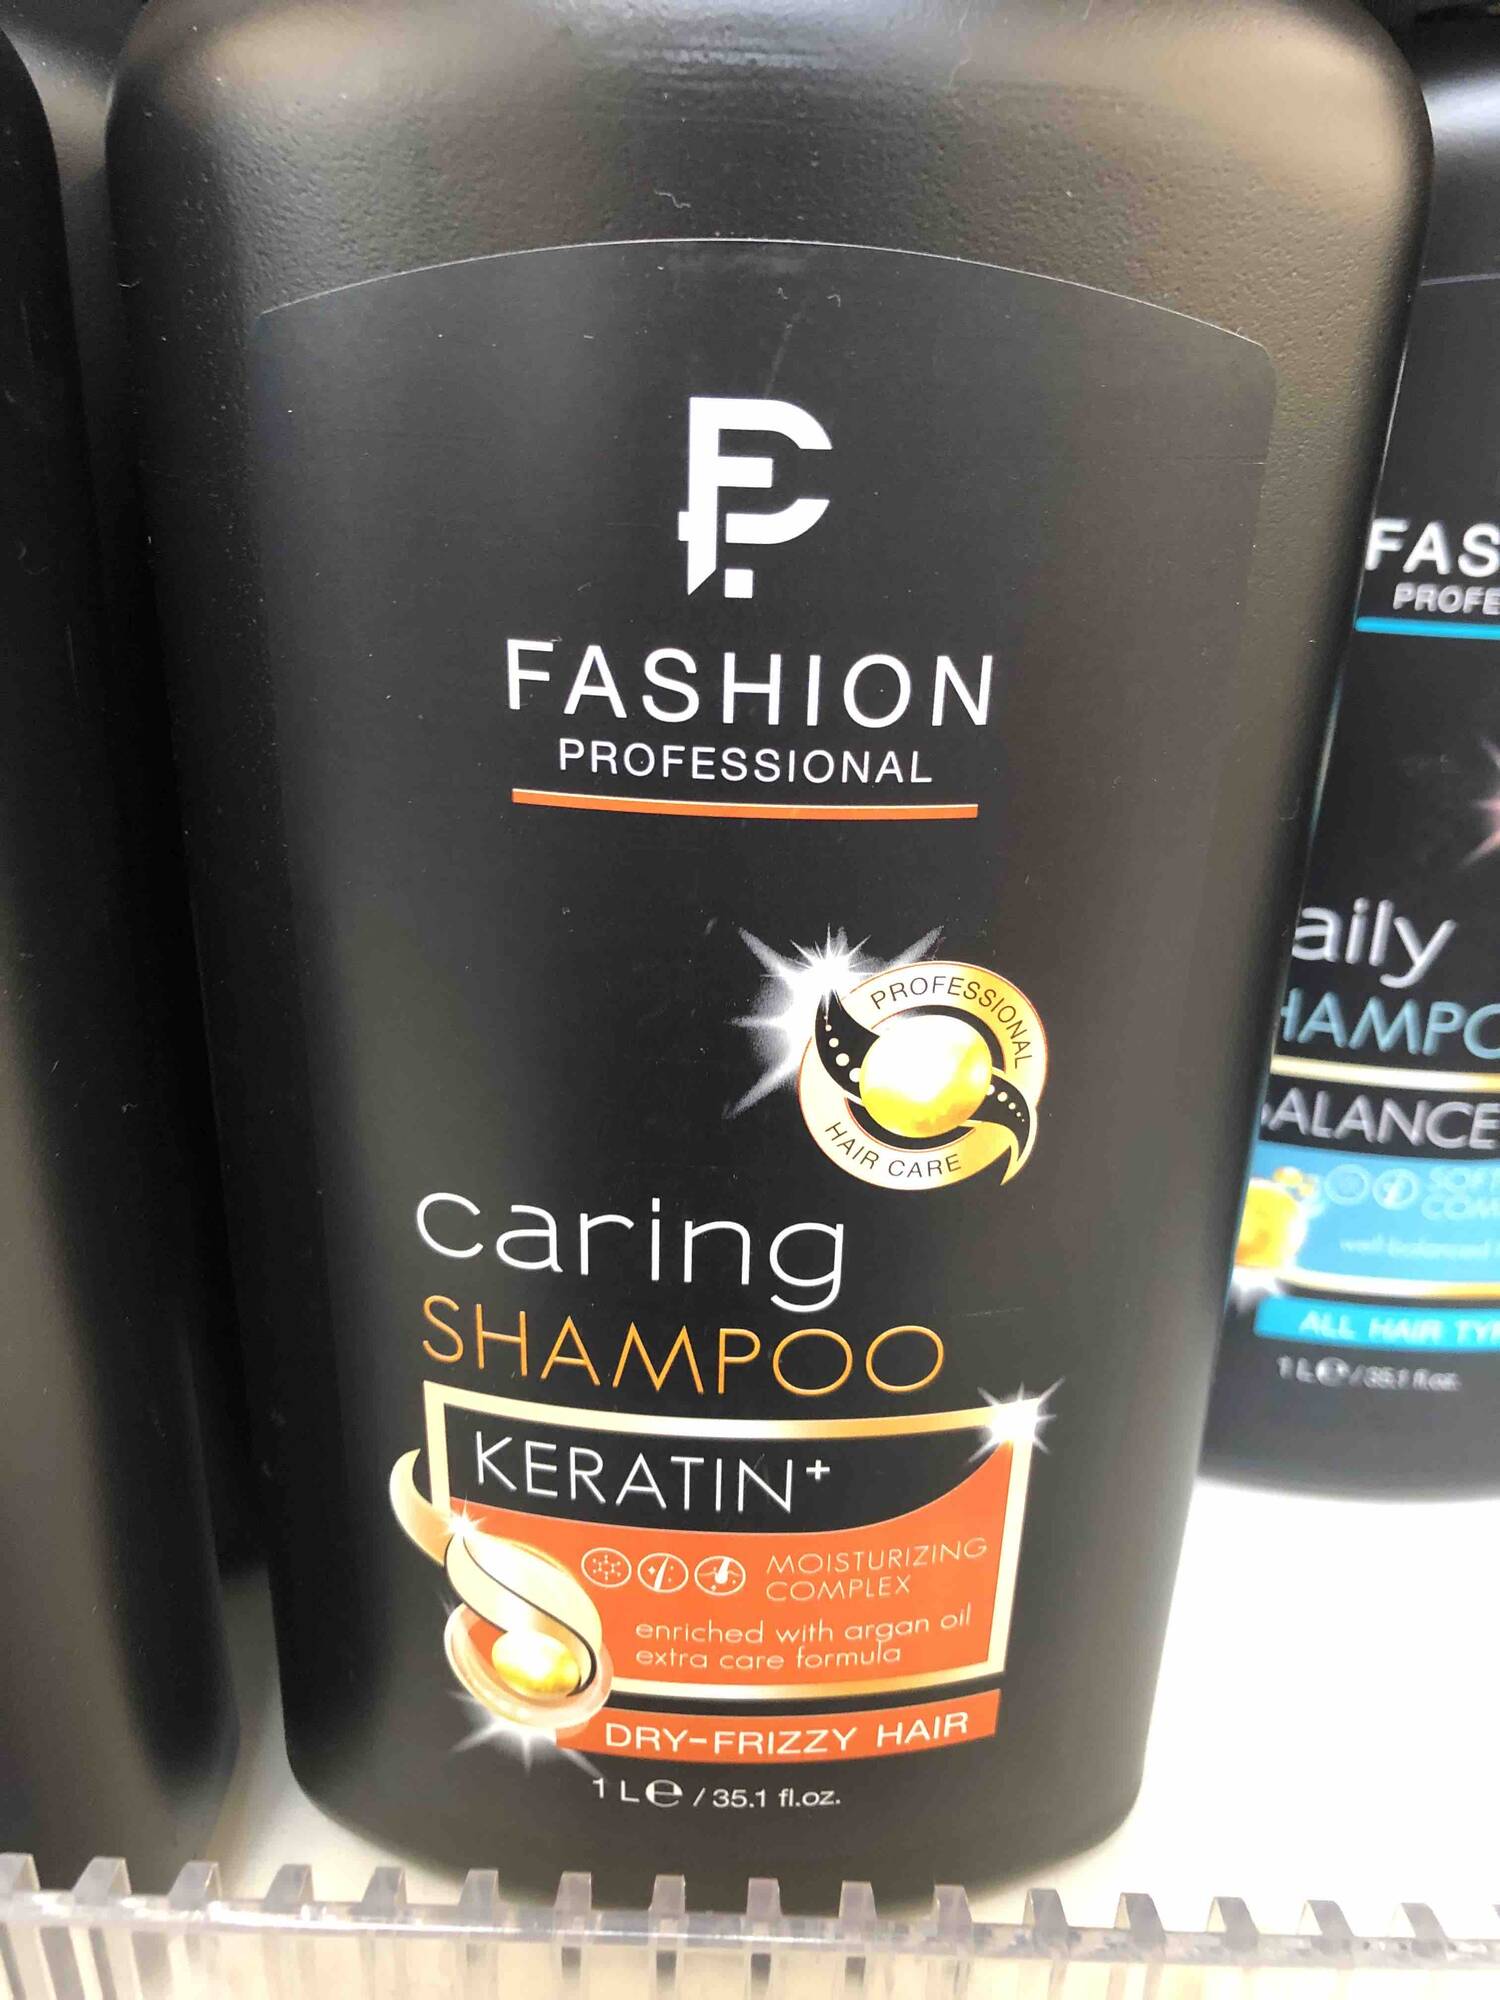 FASHION PROFESSIONAL - Caring shampoo keratin+